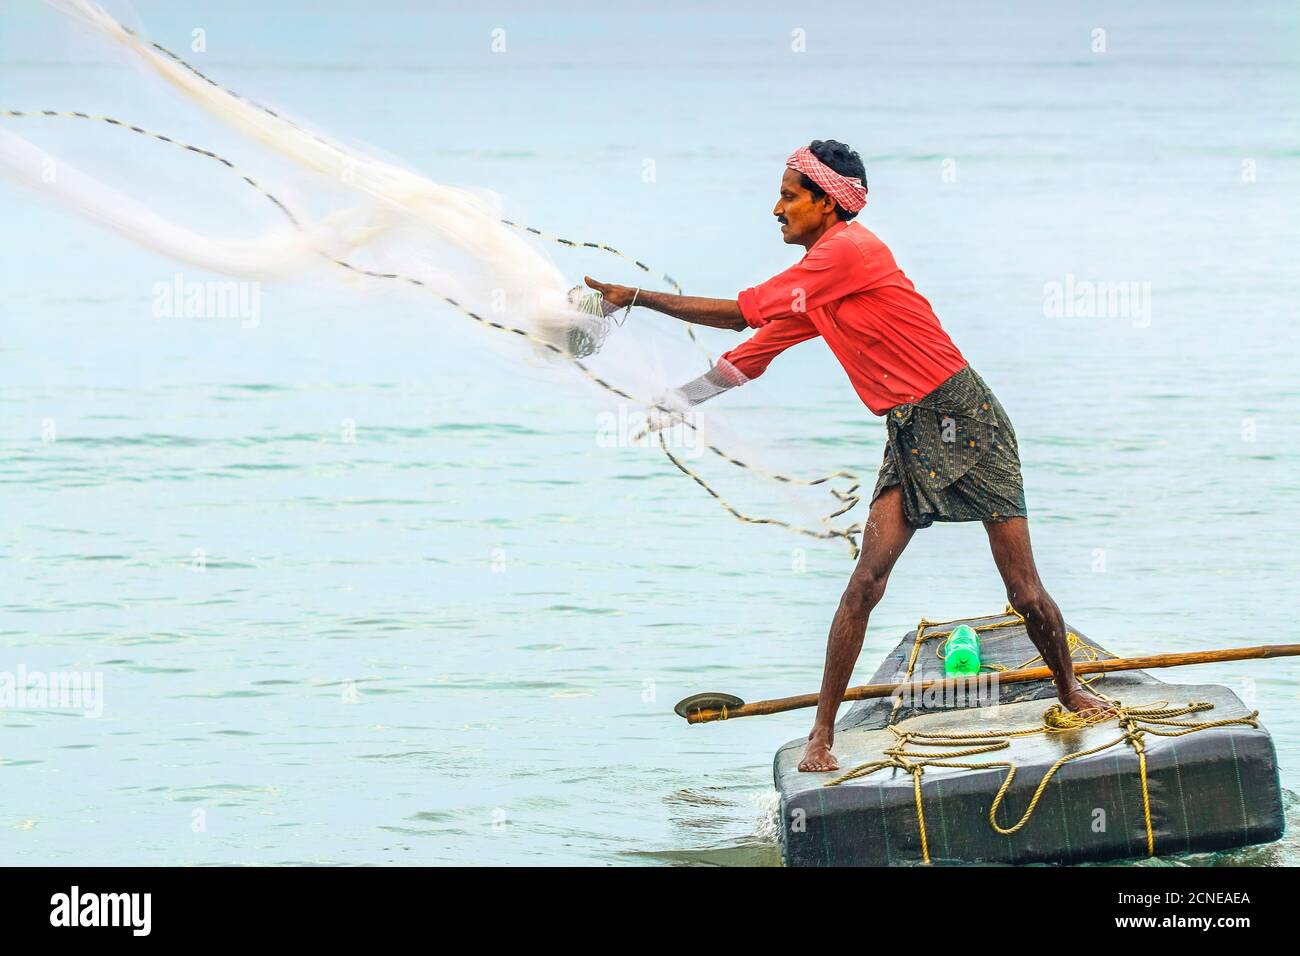 https://c8.alamy.com/comp/2CNEAEA/fisherman-casting-weighted-net-on-small-raft-offshore-of-popular-marari-beach-mararikulam-alappuzha-alleppey-kerala-india-asia-2CNEAEA.jpg